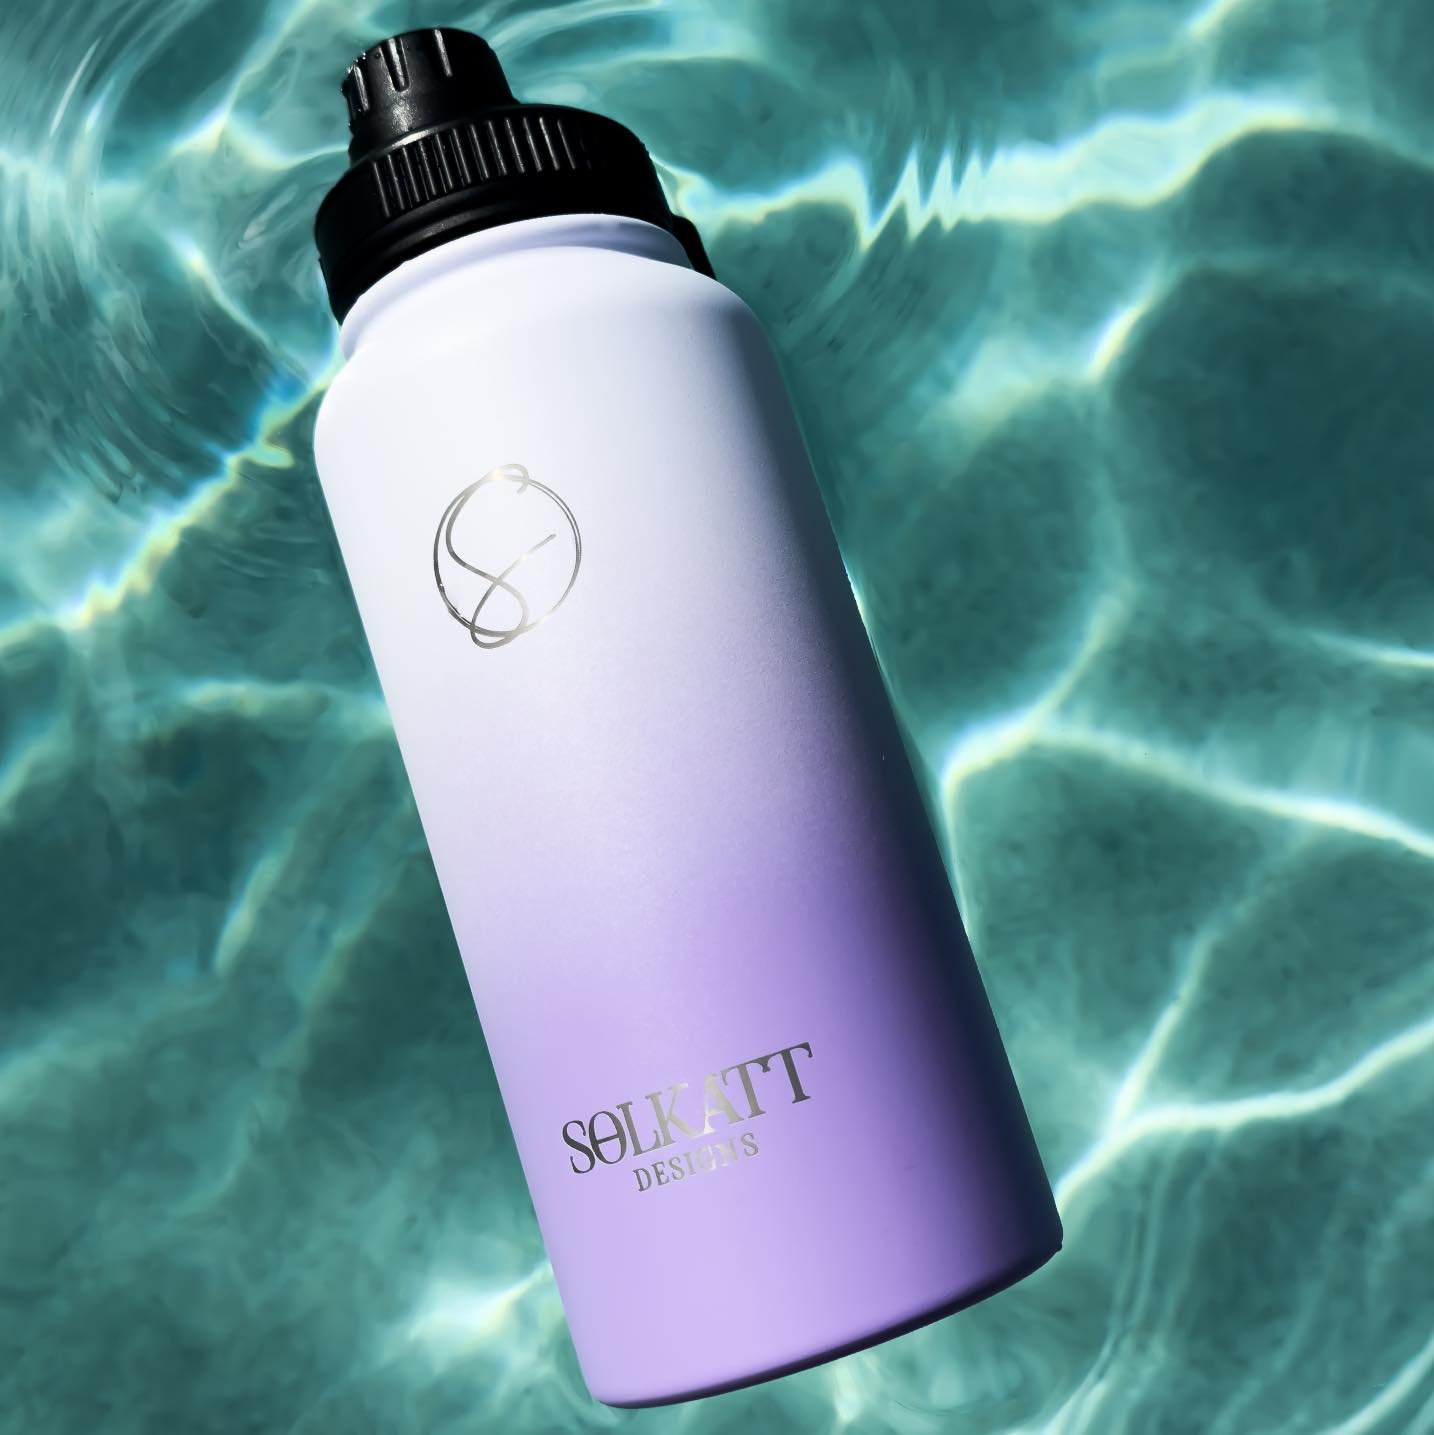 Solkatt designs Lilac purple stainless steel water drink bottle